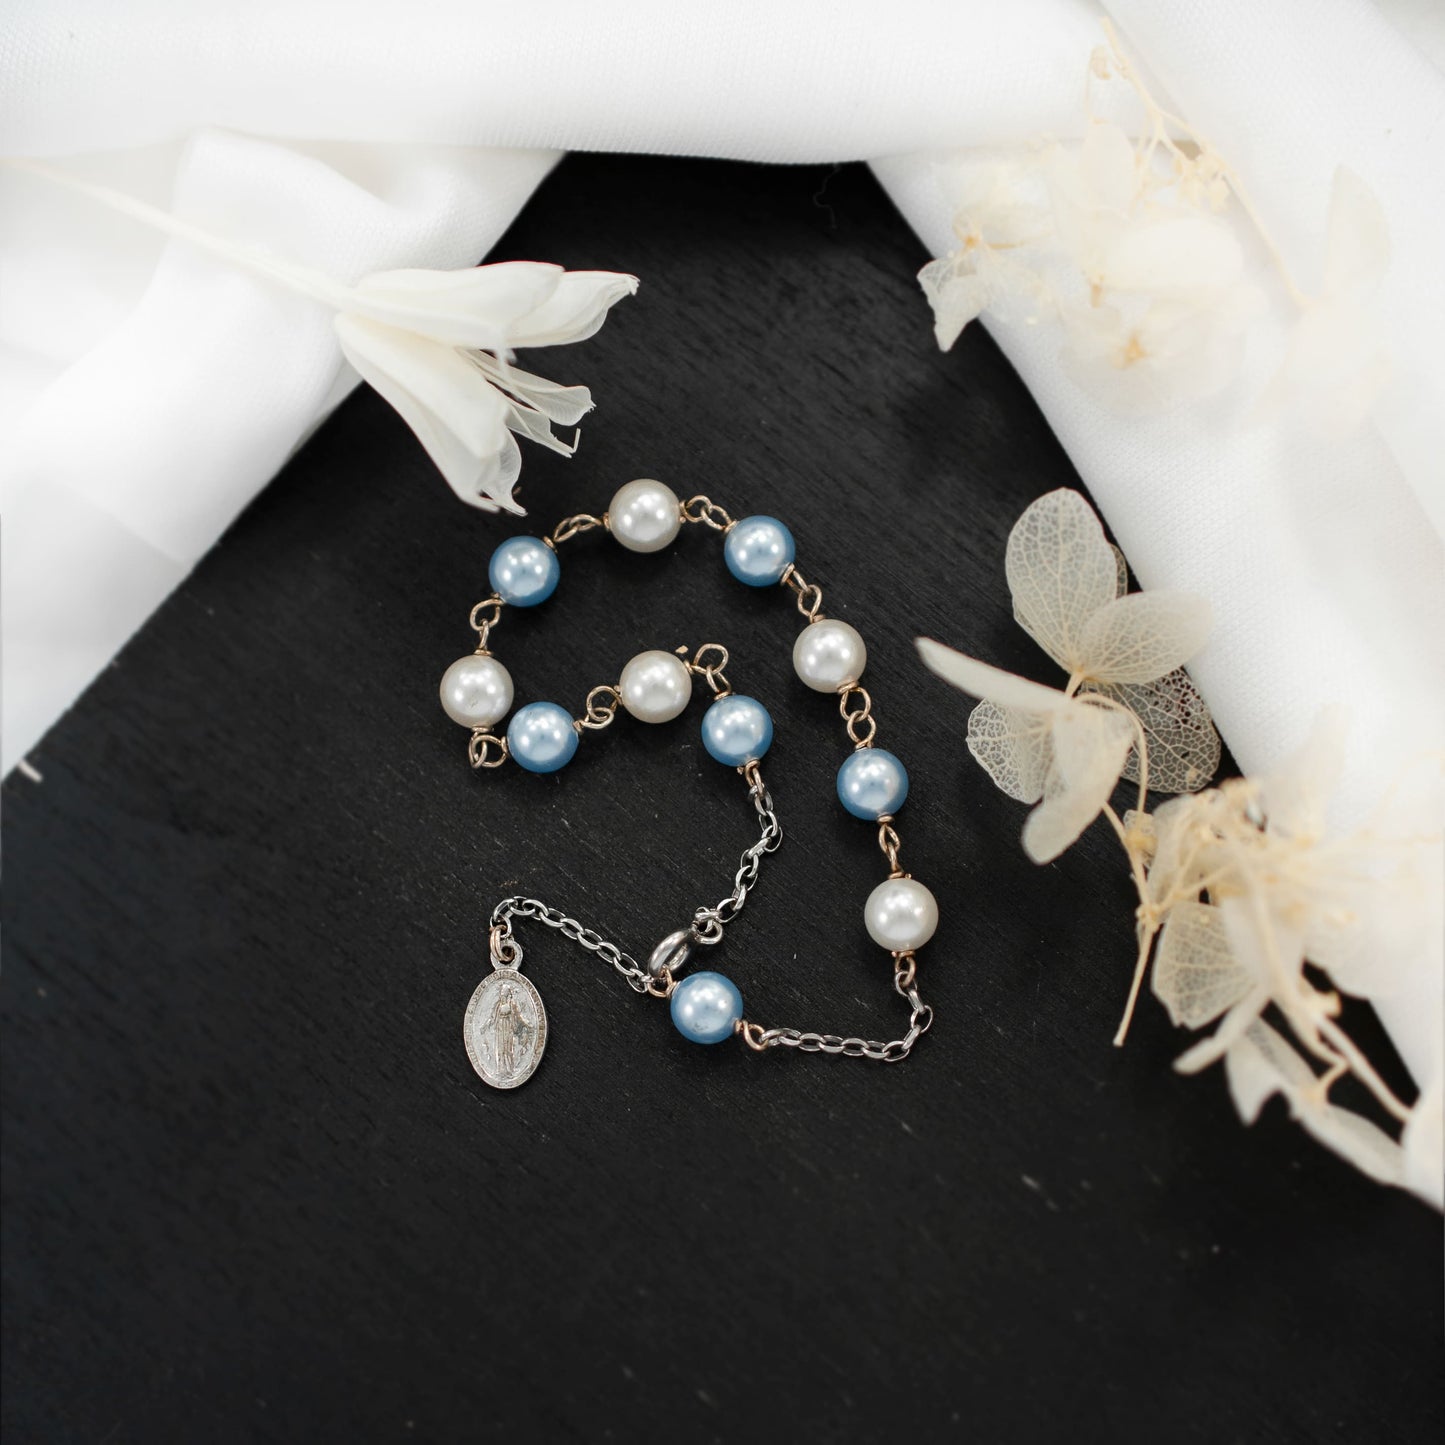 MONDO CATTOLICO Prayer Beads Adjustable Sterling Silver Rosary Bracelet Swarovski Crystal White and Light Blue Beads